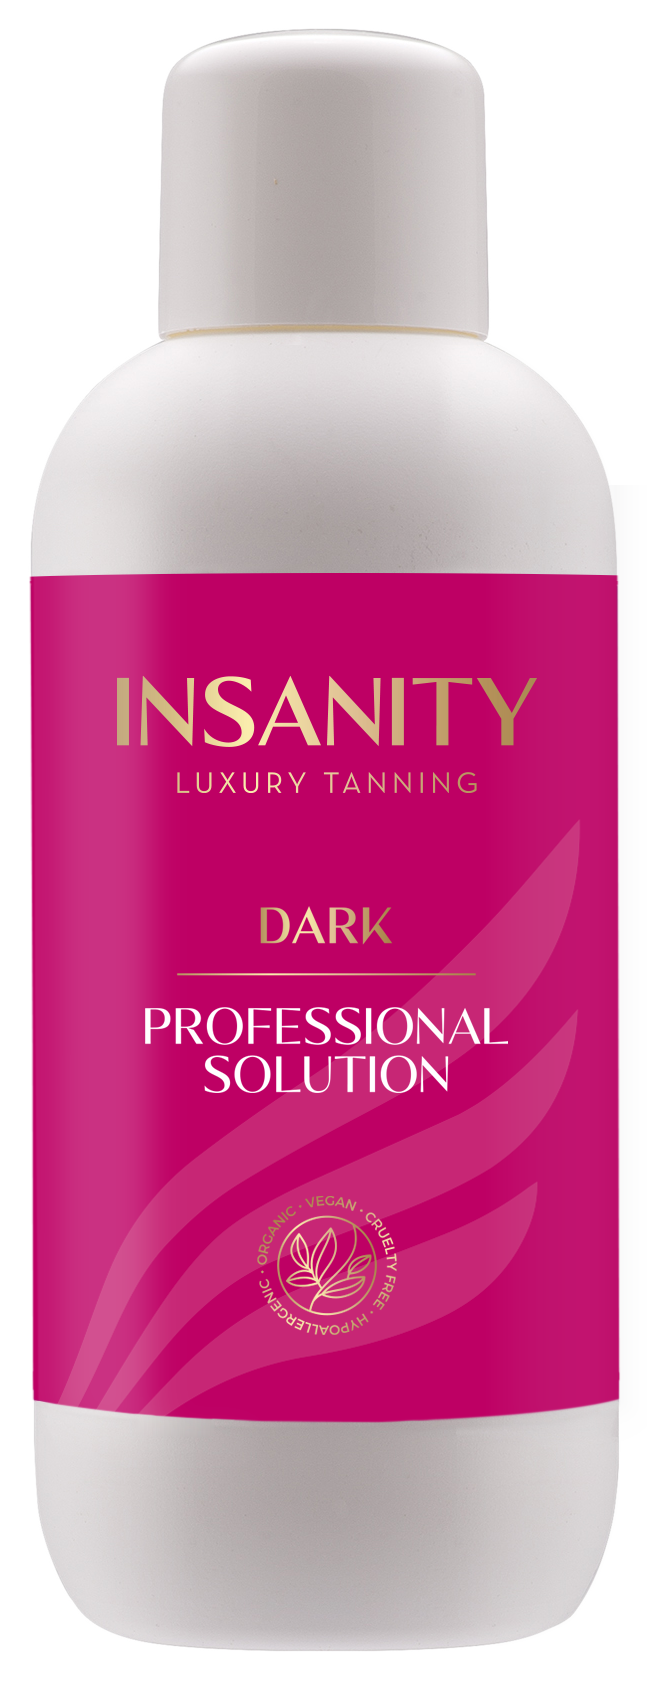 Insanity Professional Solution - Dark